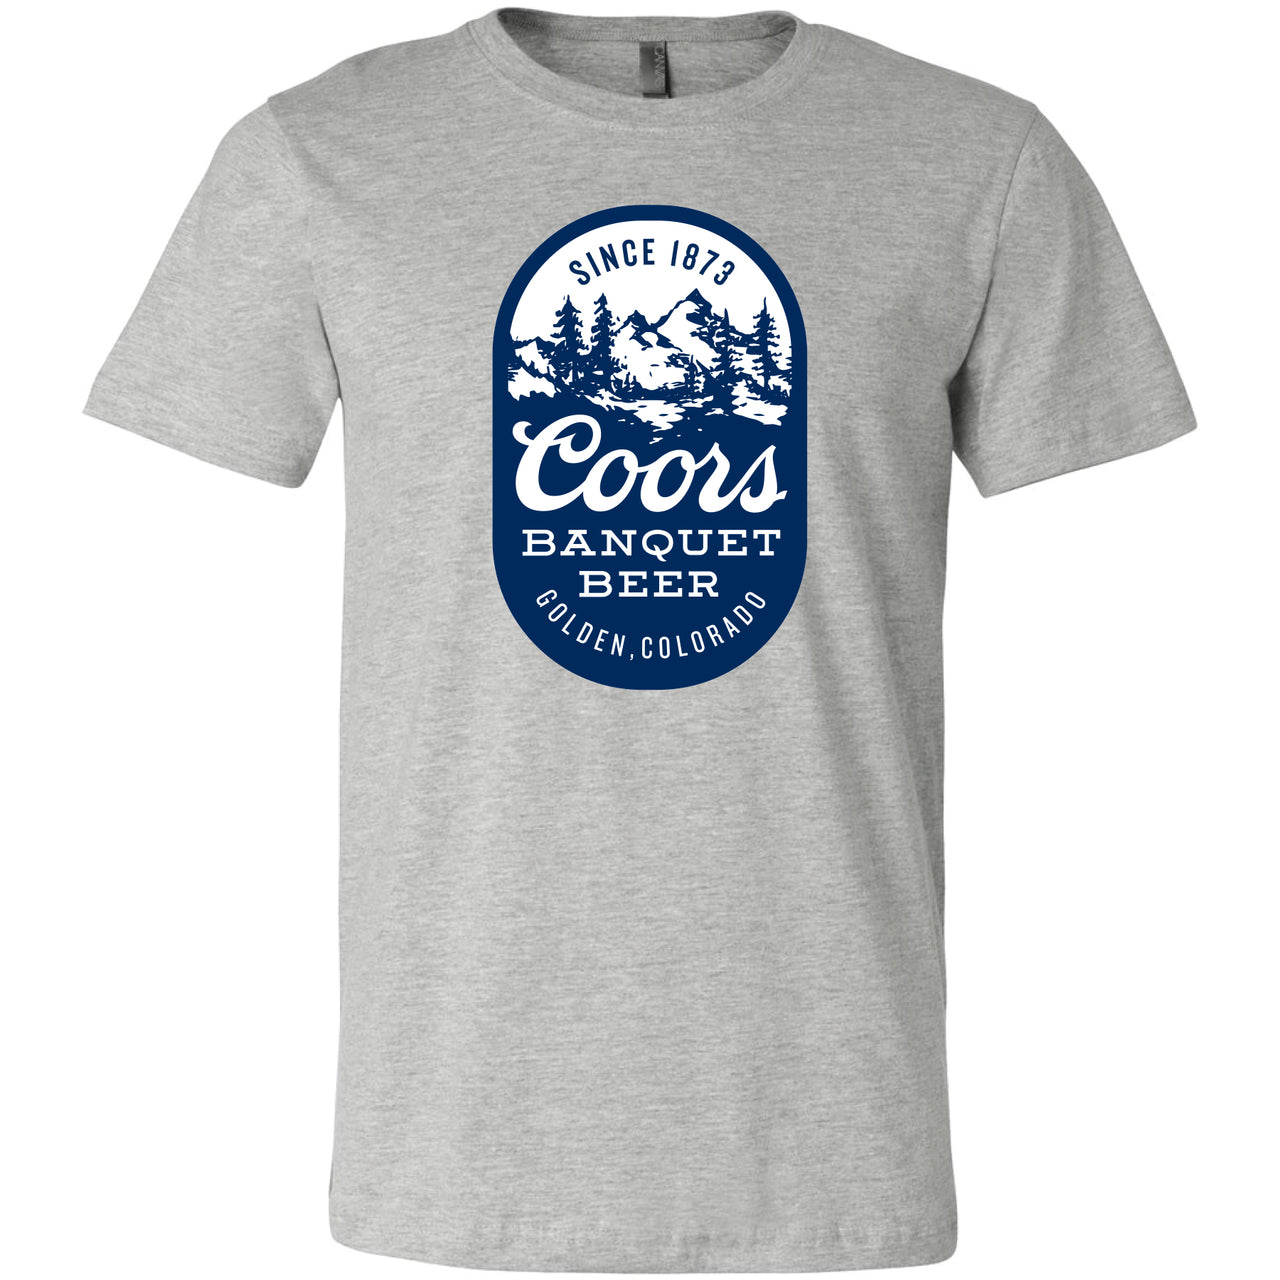 Coors Banquet Beer Oval T-Shirt